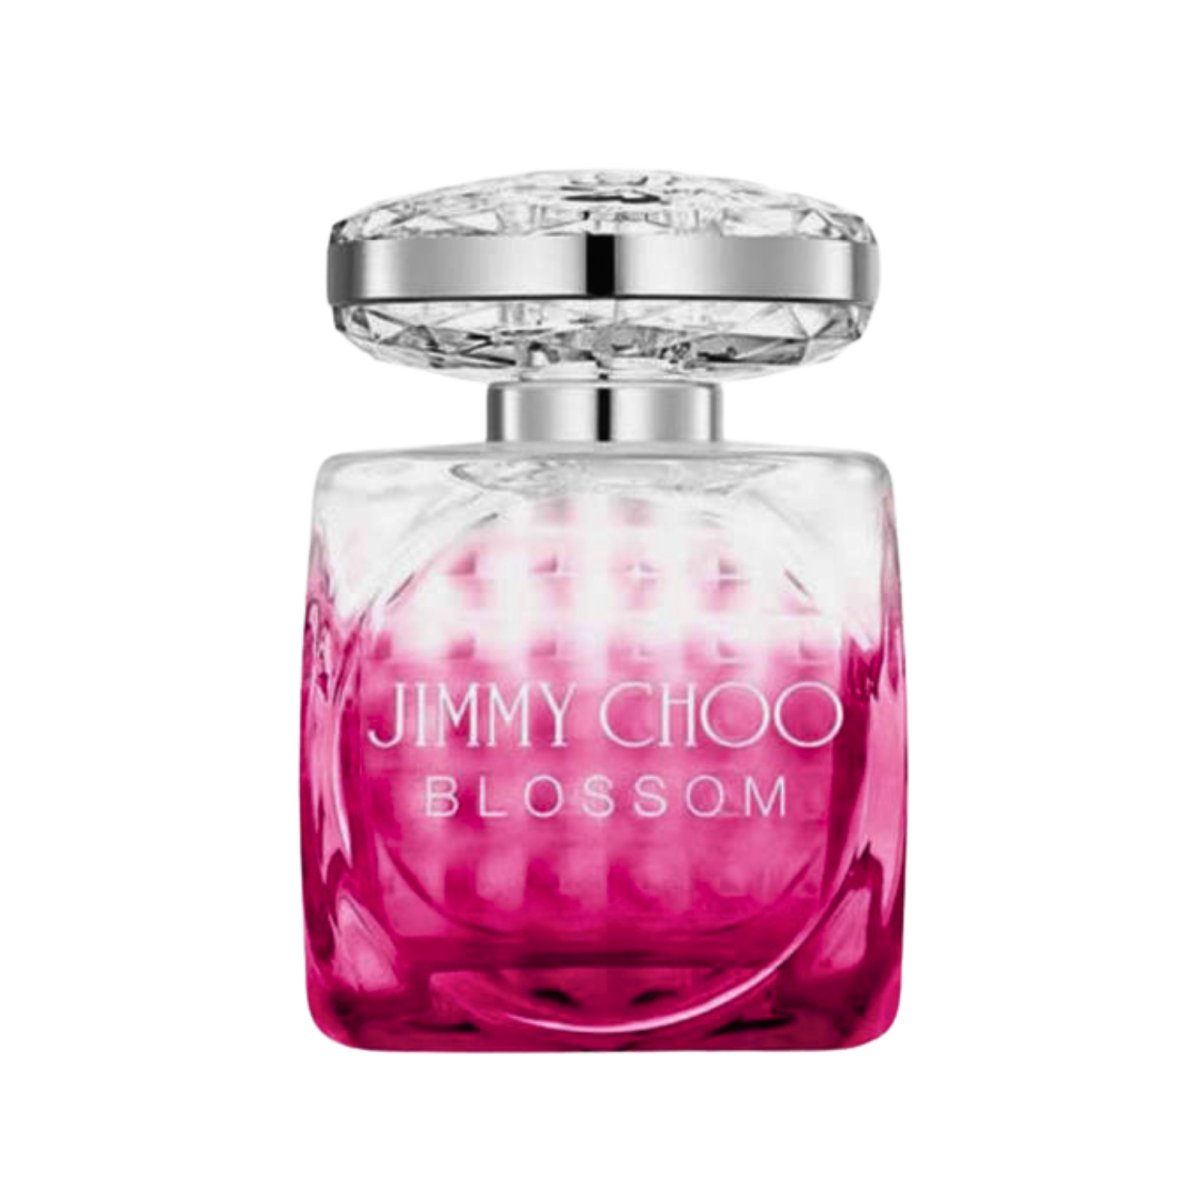 Jimmy Choo Blossom for Women by Jimmy Choo 3.3 oz - Jimmy Choo - Fragrance